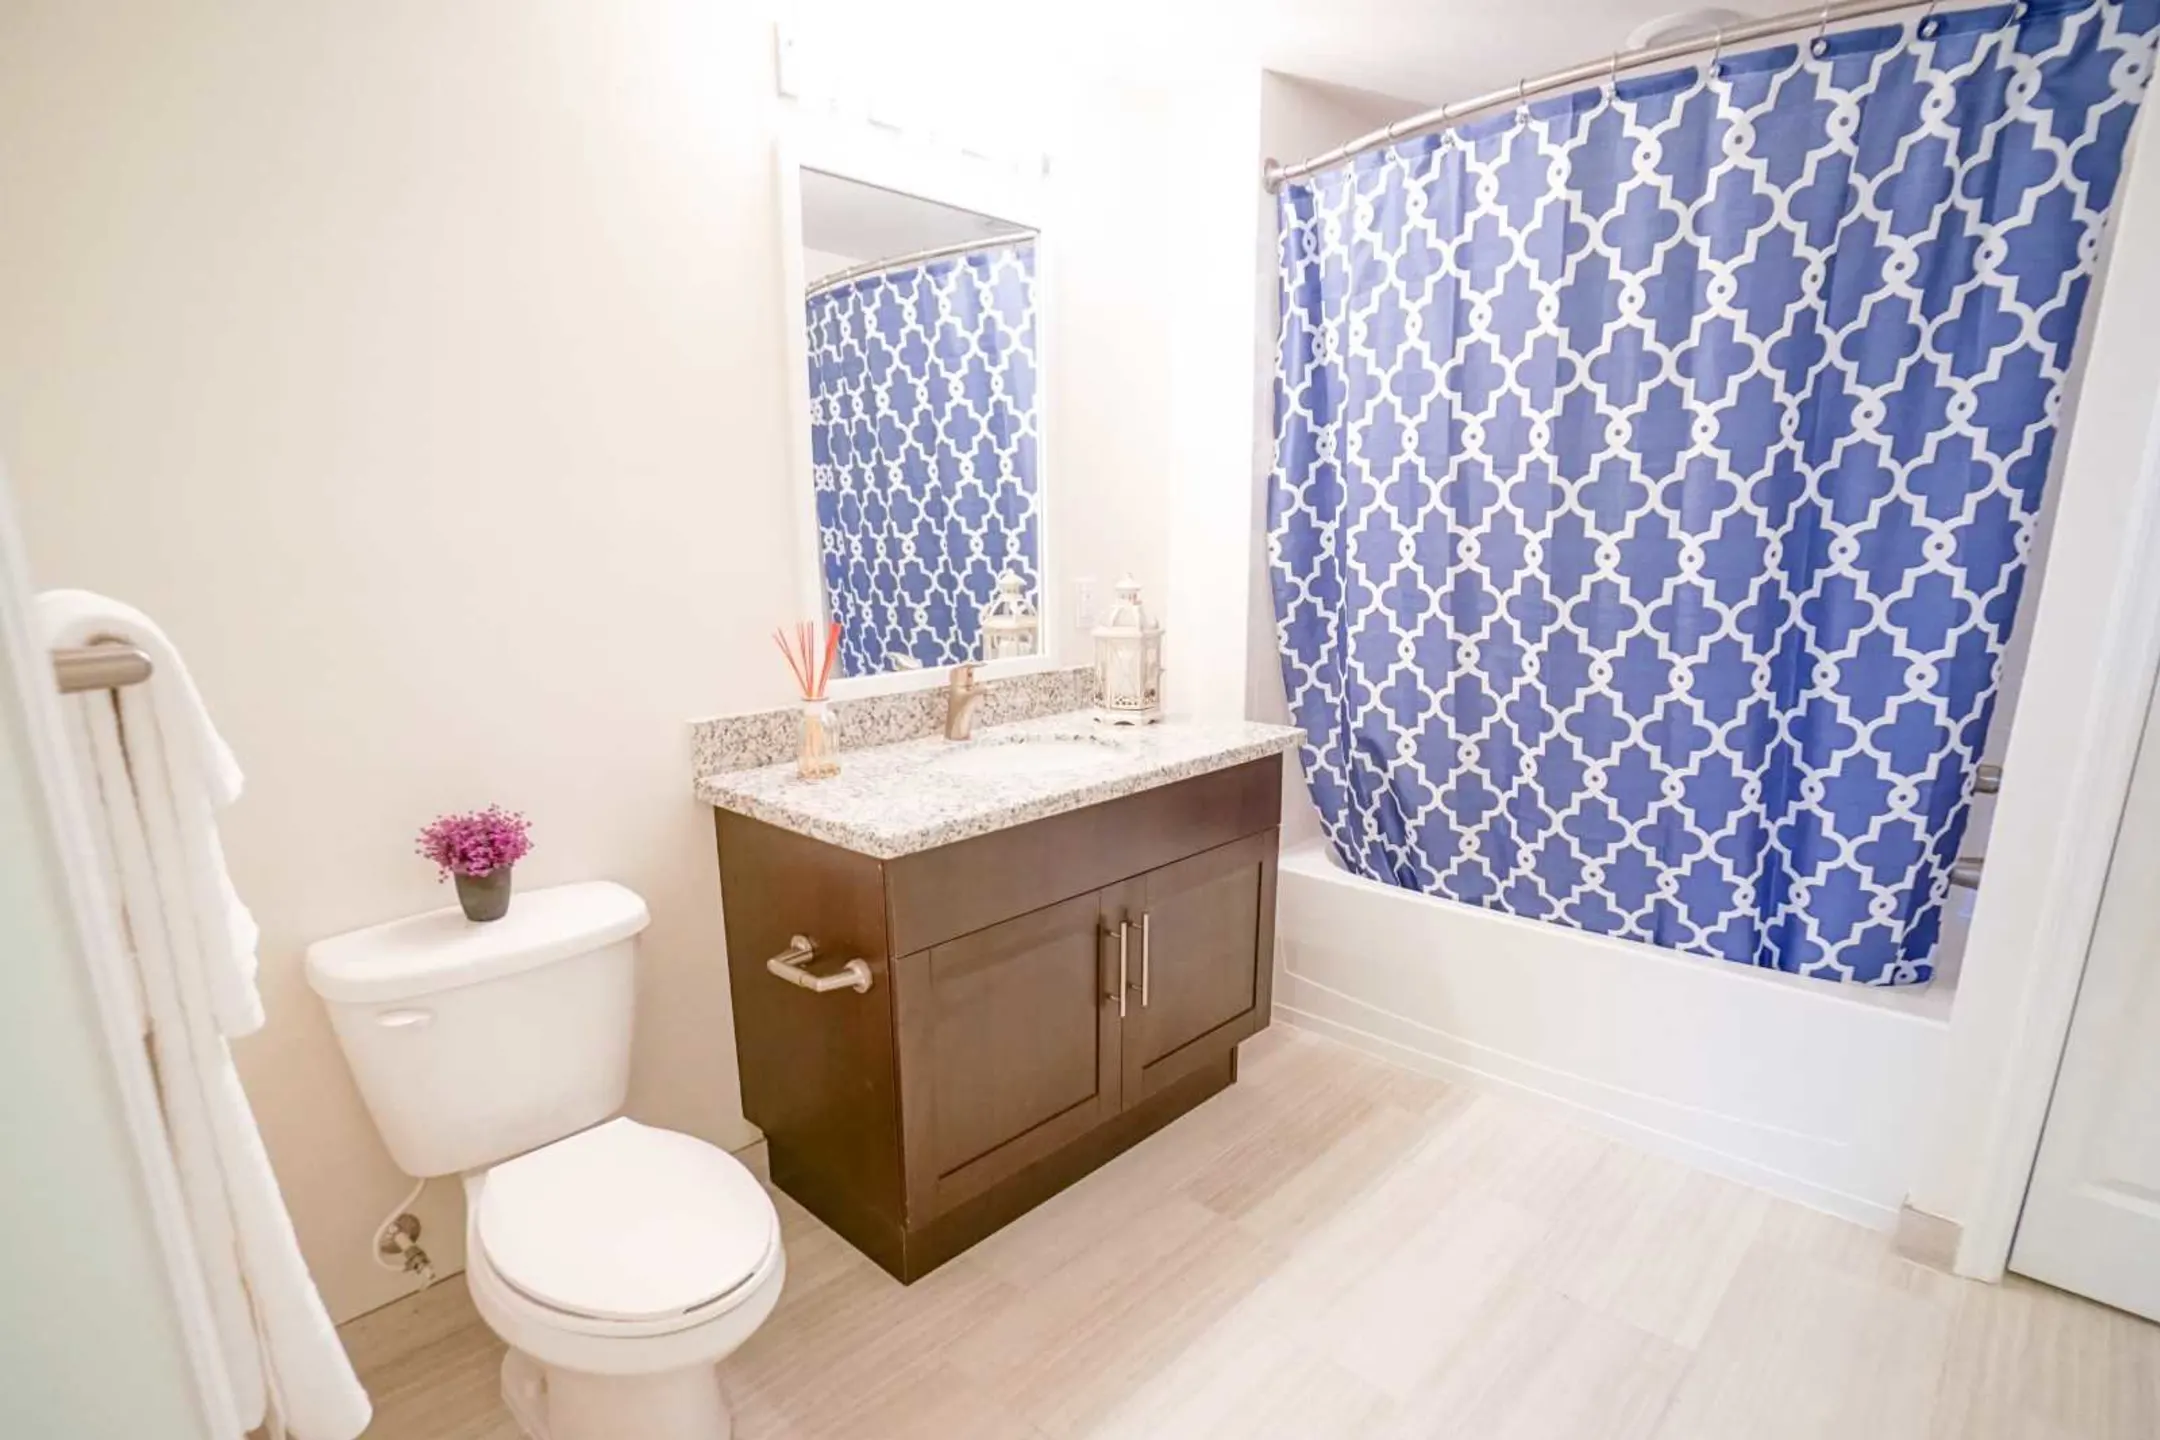 Bathroom - Metropolitan - Wilton Manors, FL